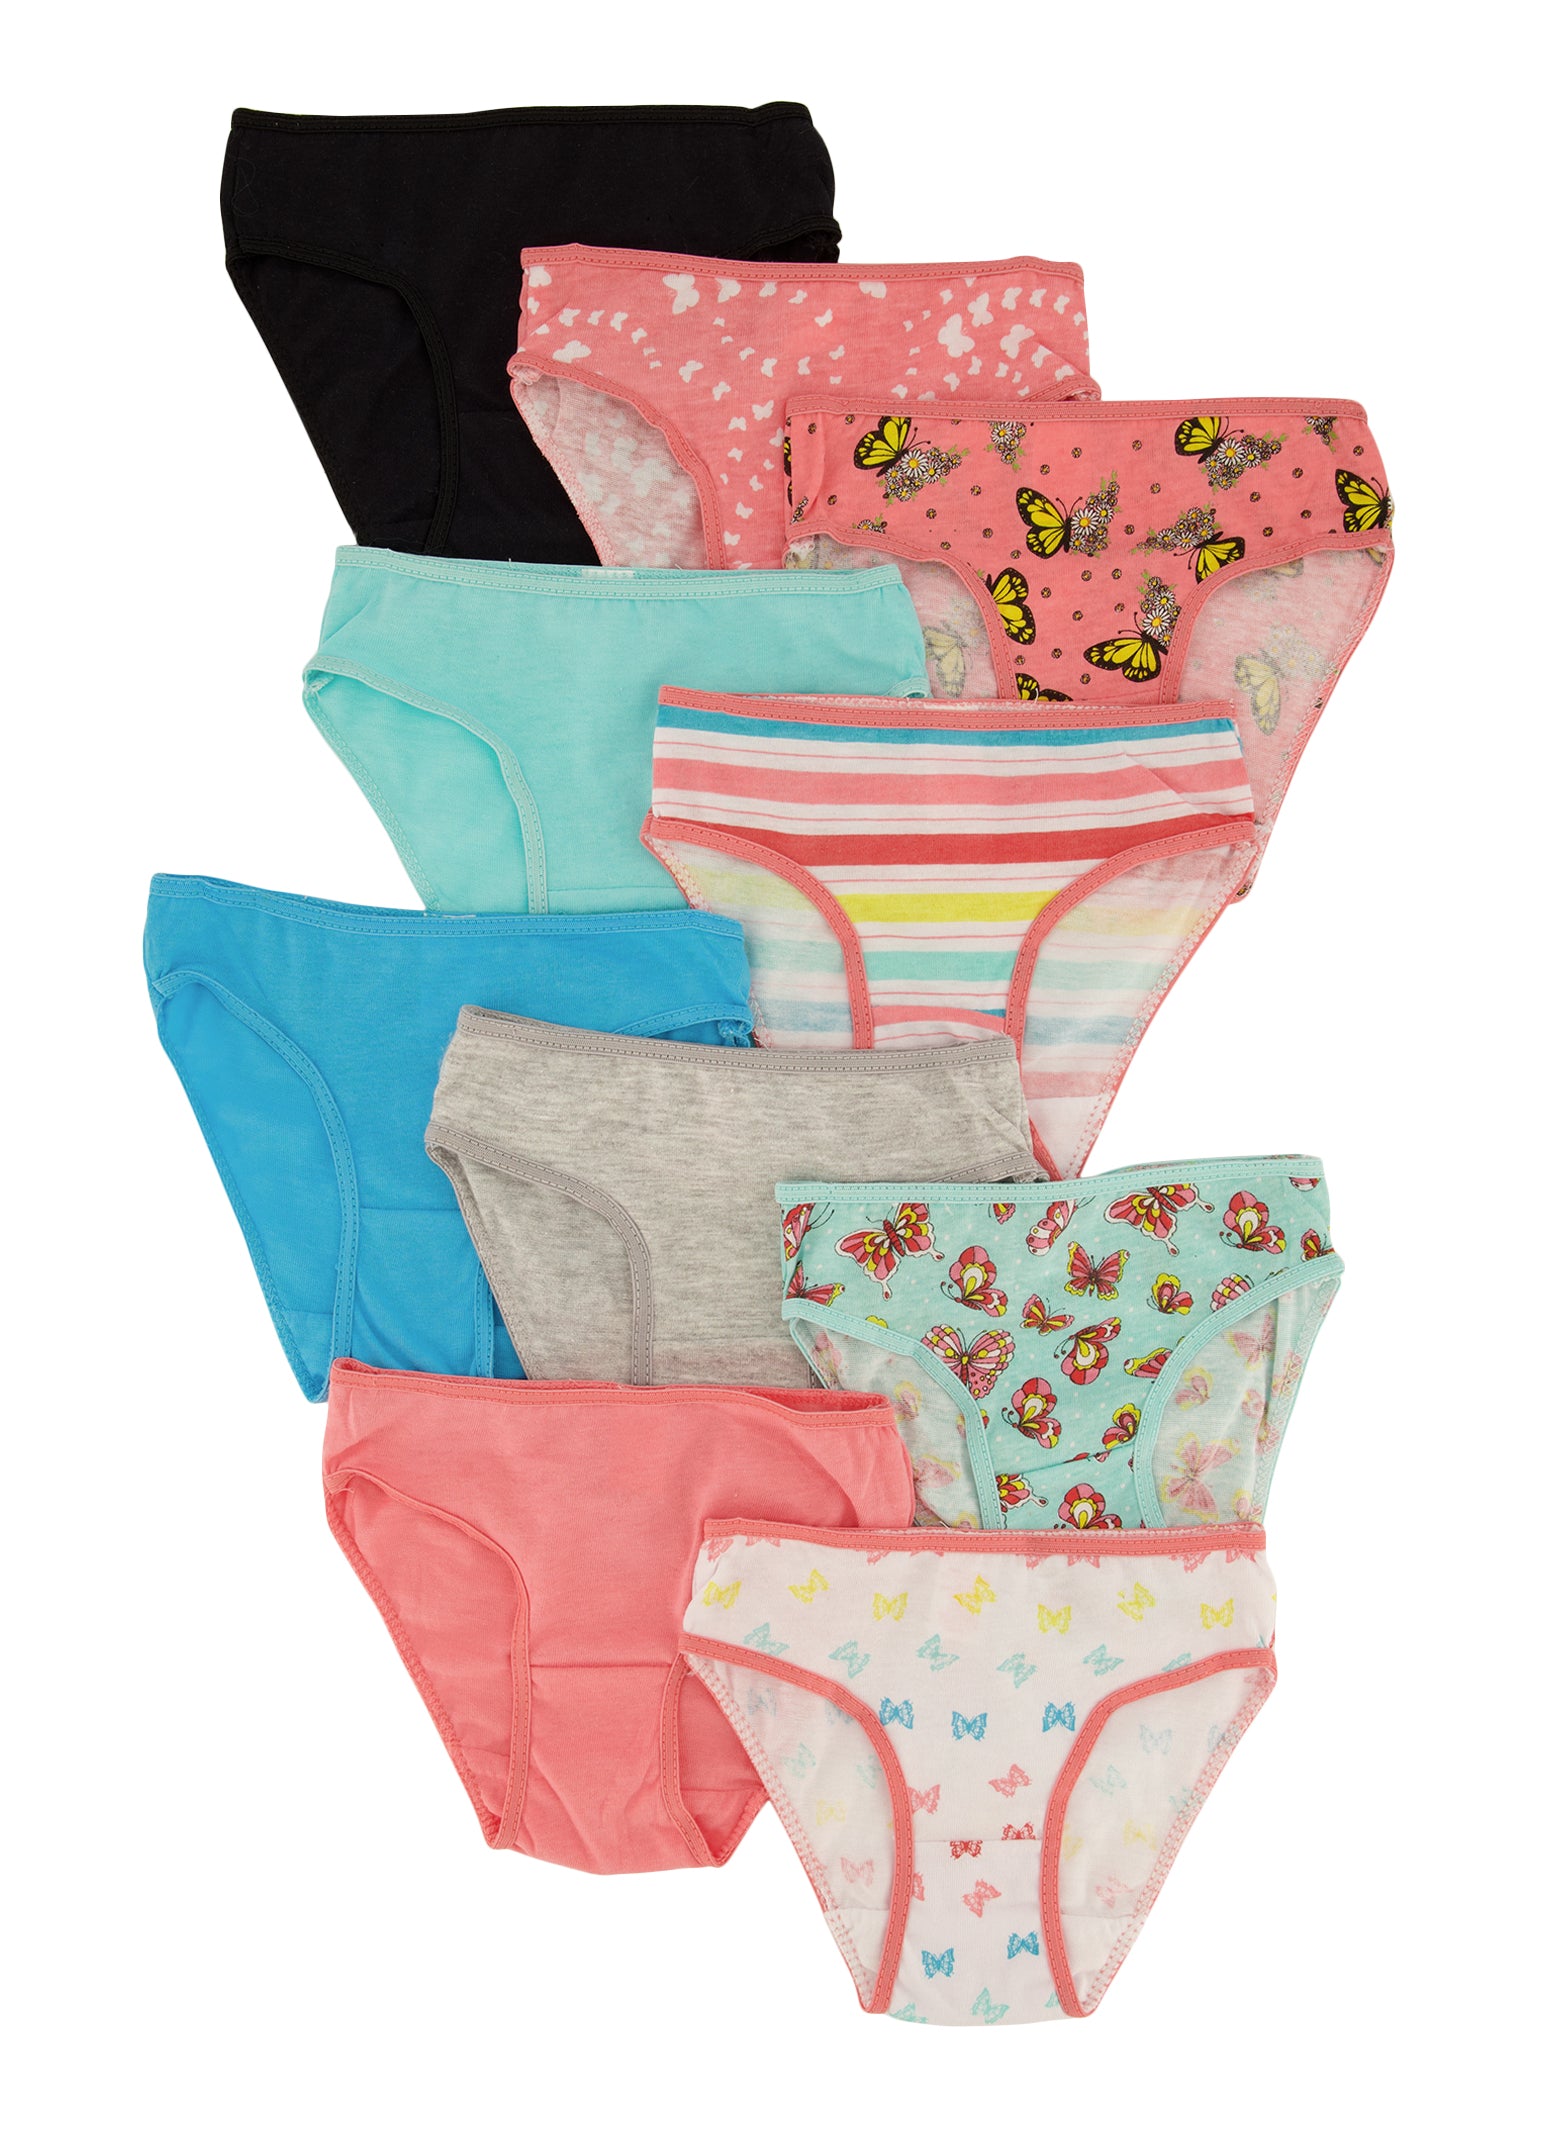 Hanes Girls Brief Underwear, 10 Pack Panties - Size 16